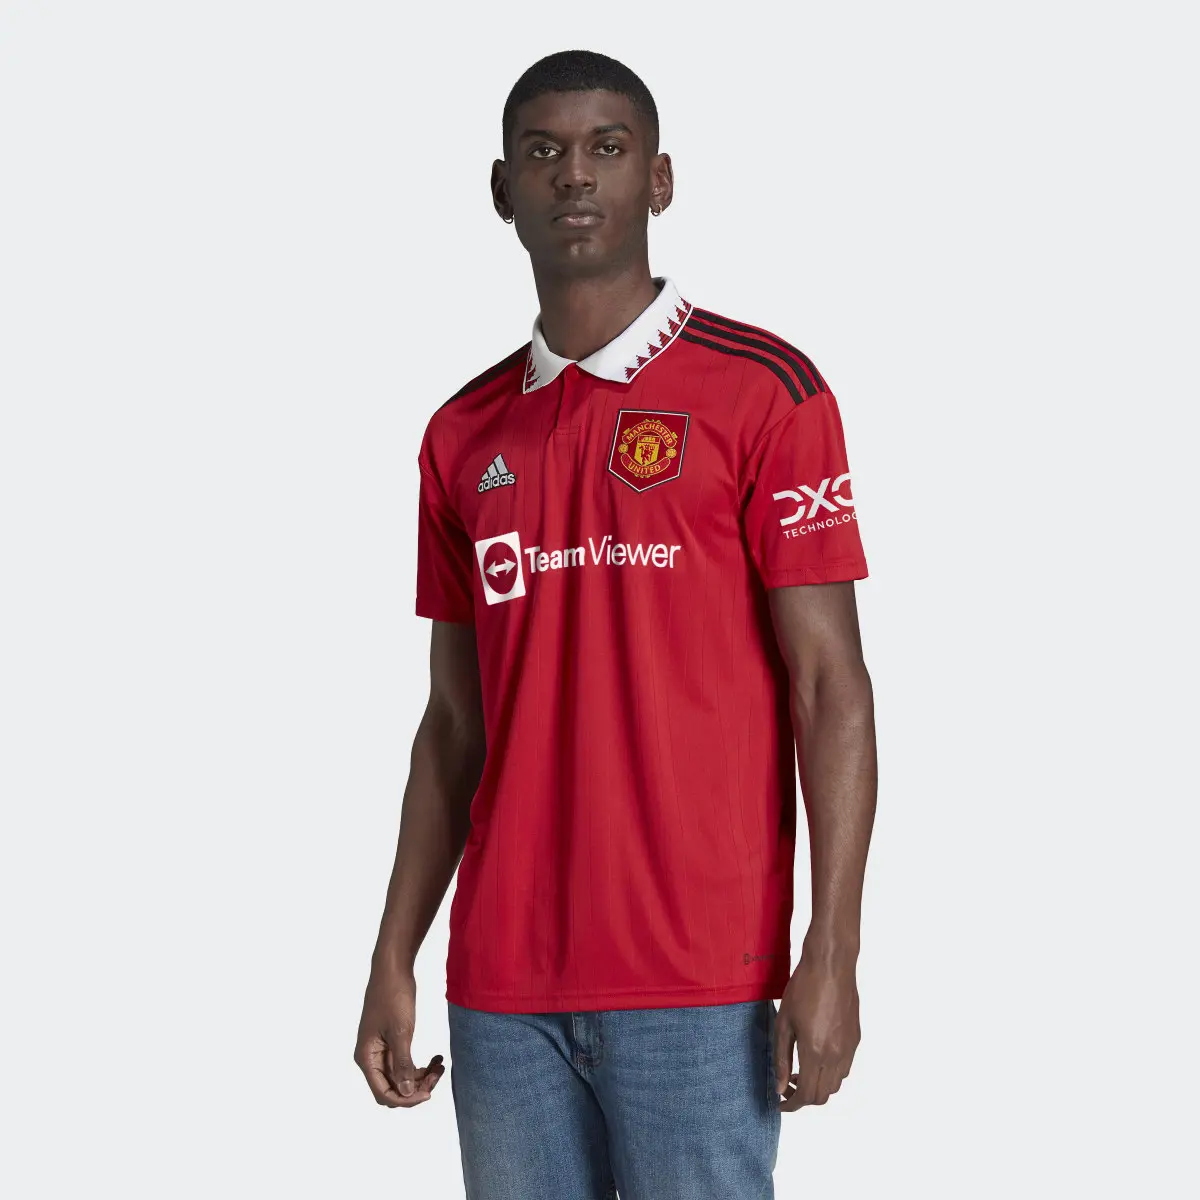 Adidas Jersey Uniforme de Local Manchester United 22/23. 2